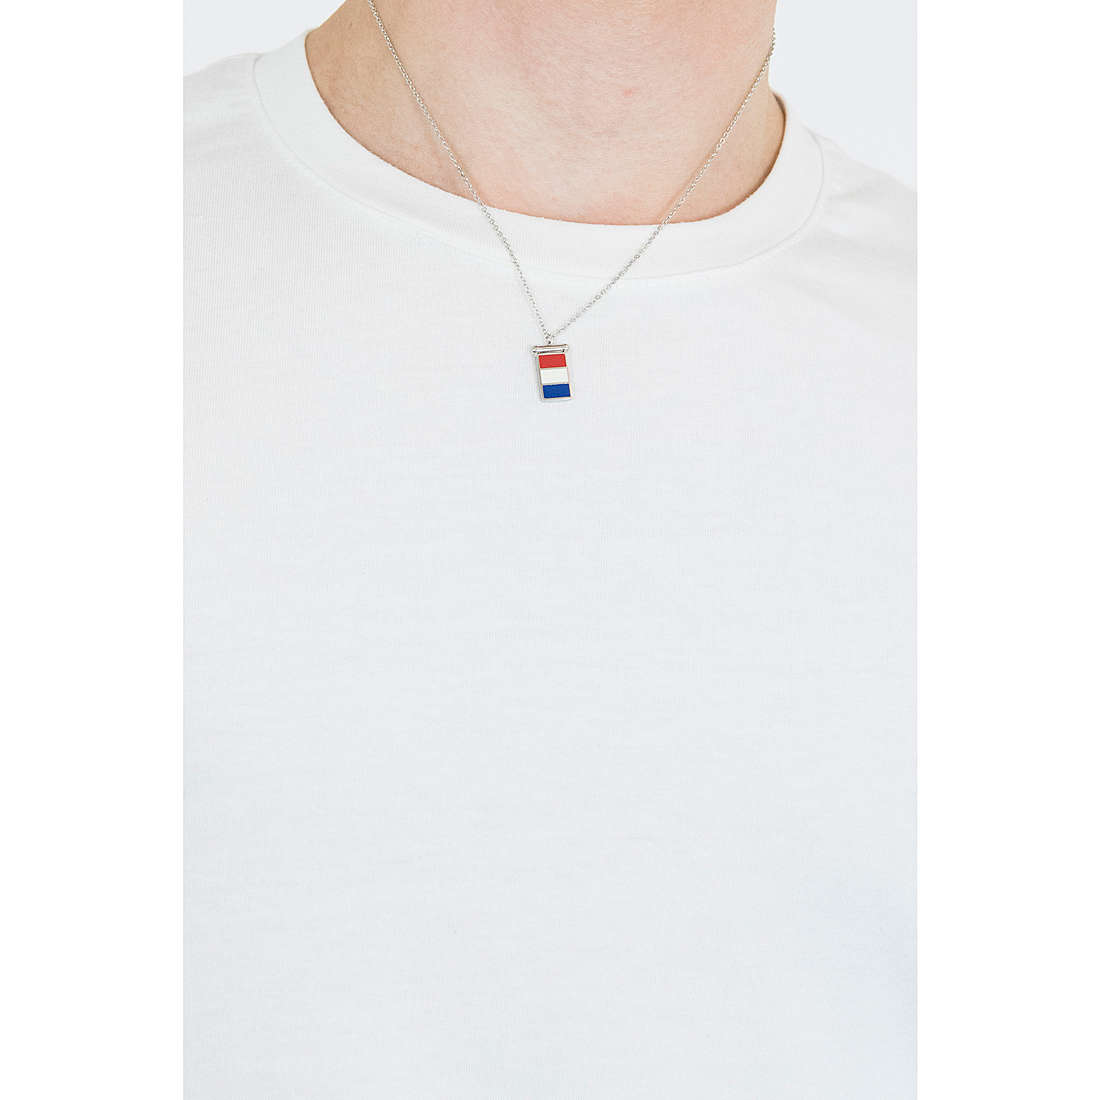 Luca Barra necklaces man LBCA362 wearing